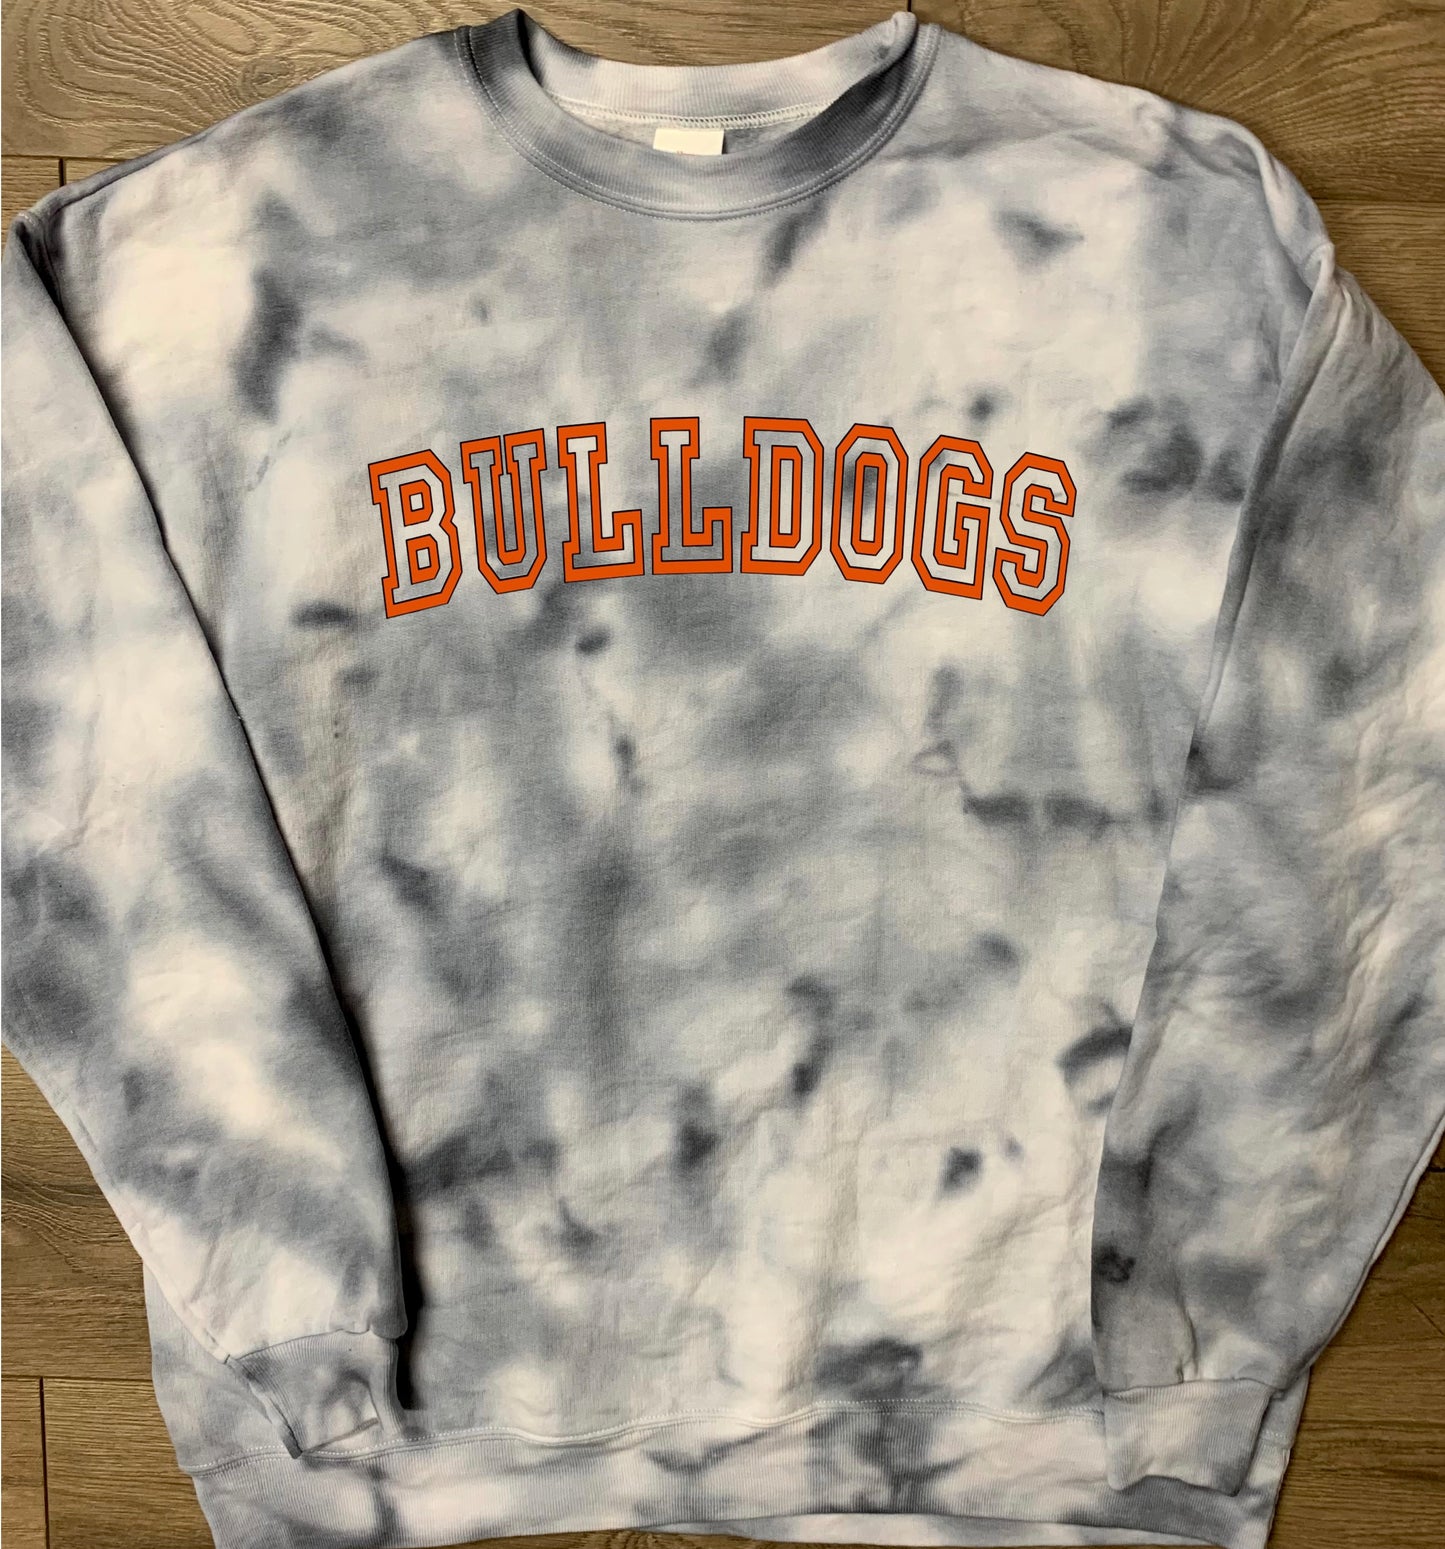 Hand-dyed Adult Heath Bulldogs Gray Curved Block Bulldogs Tie Dye Crewneck Sweatshirt